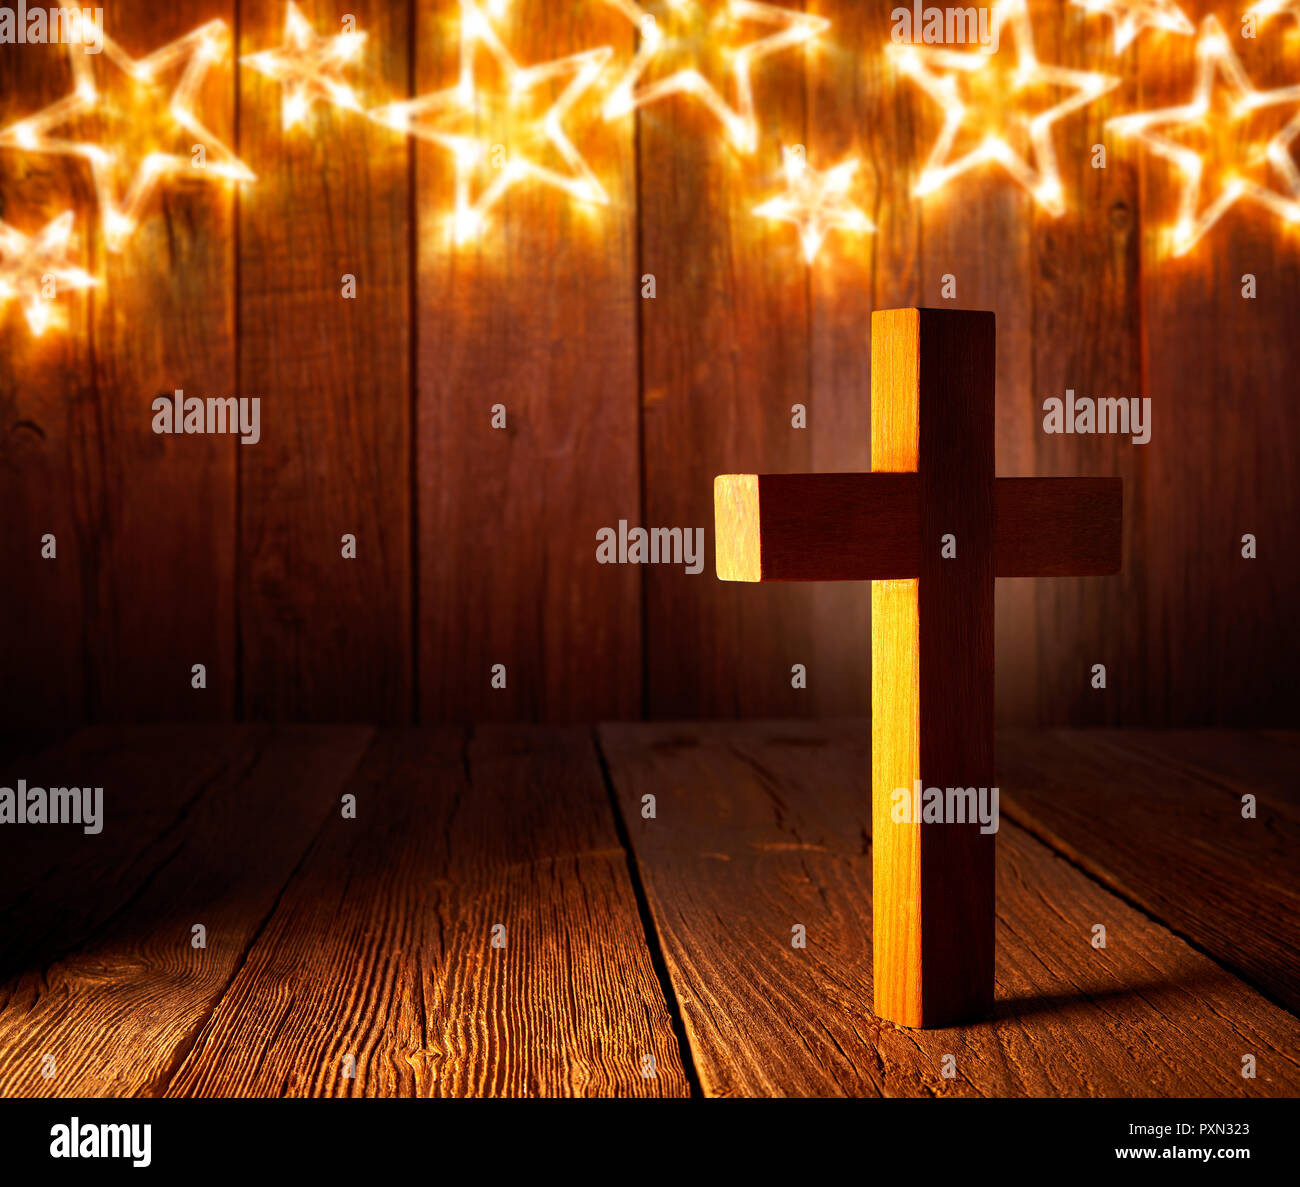 religious christmas background graphics